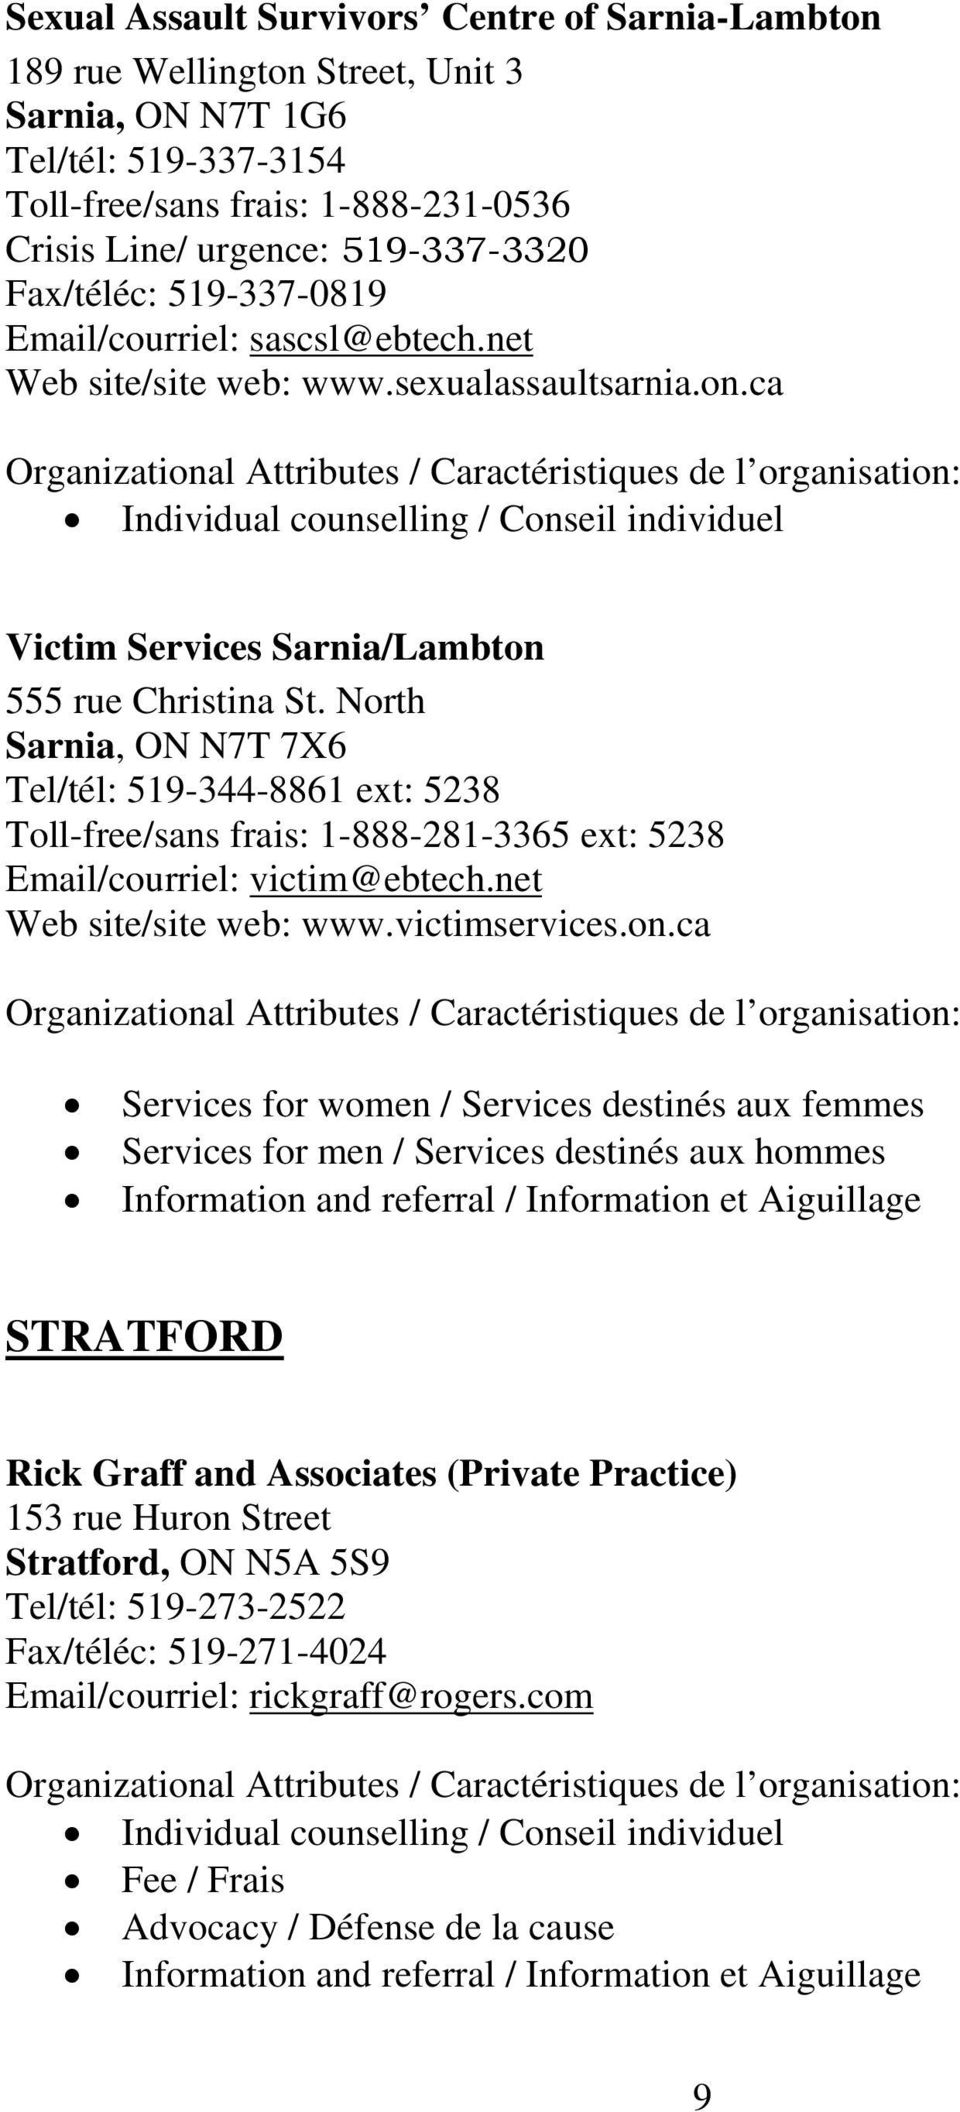 North Sarnia, ON N7T 7X6 Tel/tél: 519-344-8861 ext: 5238 Toll-free/sans frais: 1-888-281-3365 ext: 5238 Email/courriel: victim@ebtech.net Web site/site web: www.victimservices.on.